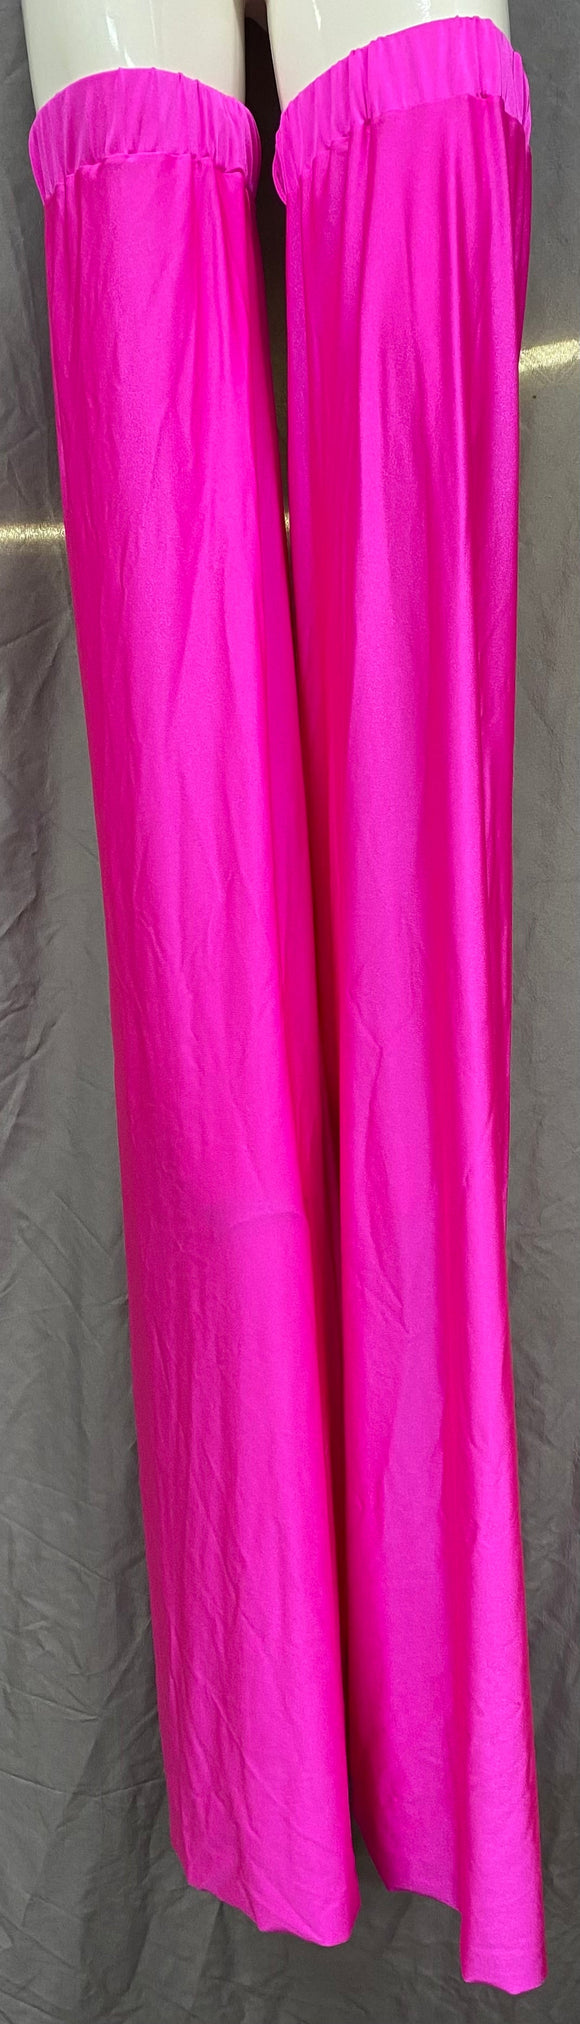 Stilt Covers - Neon Pink 65